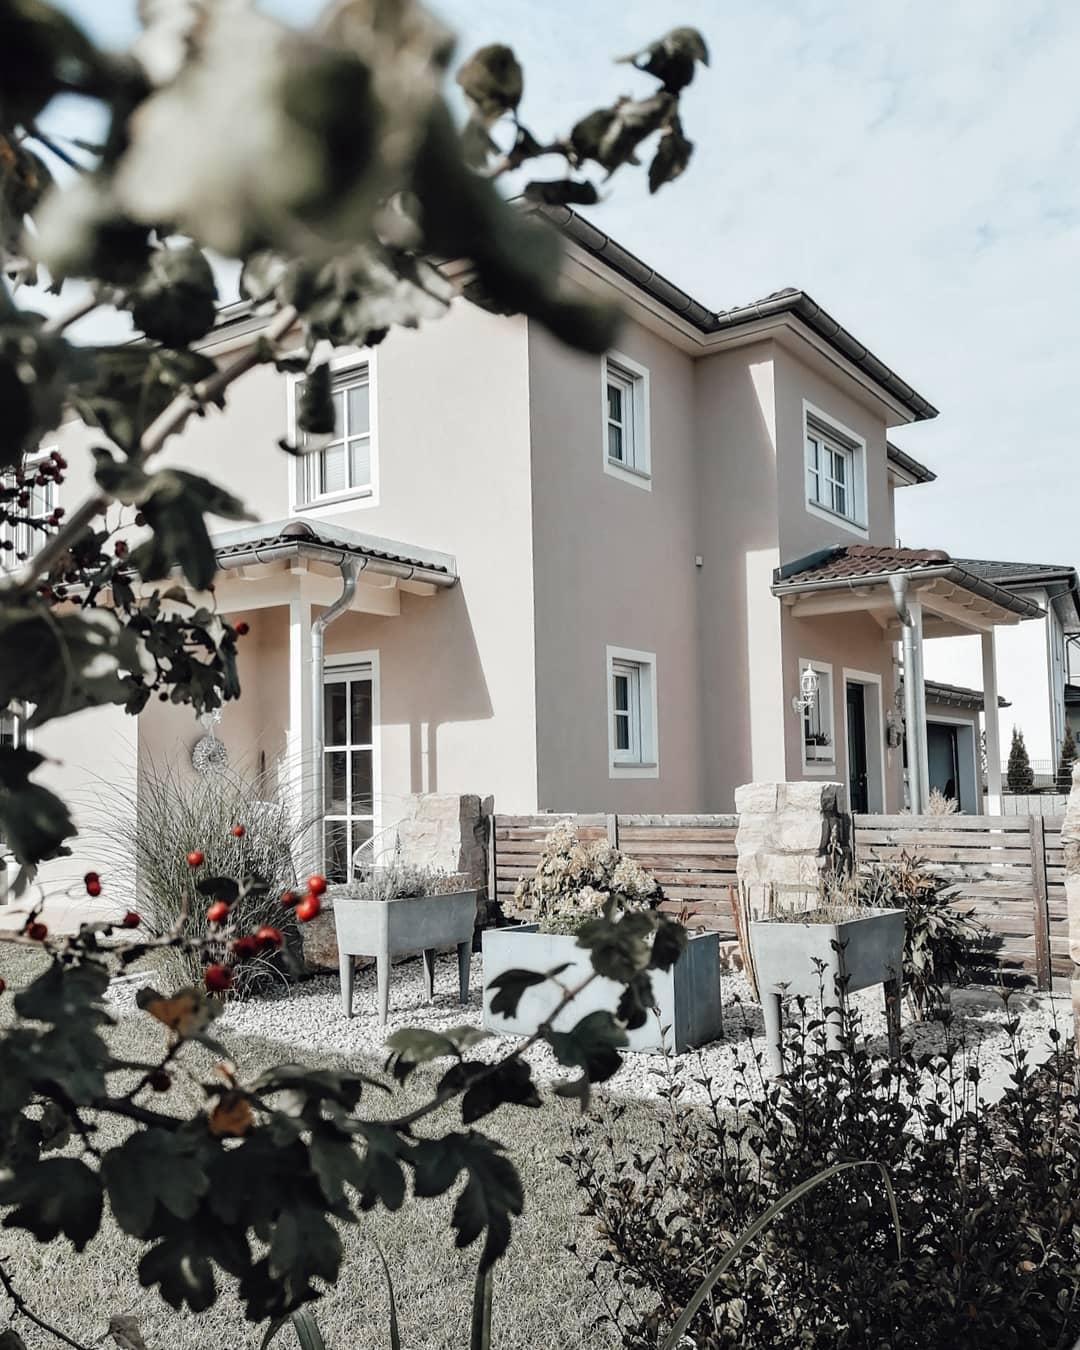 #toskanahaus #stadtvilla #landhaus #interiordesign #skandinavischwohnen #nordicinspiration #nordicliving #schoenerwohnen